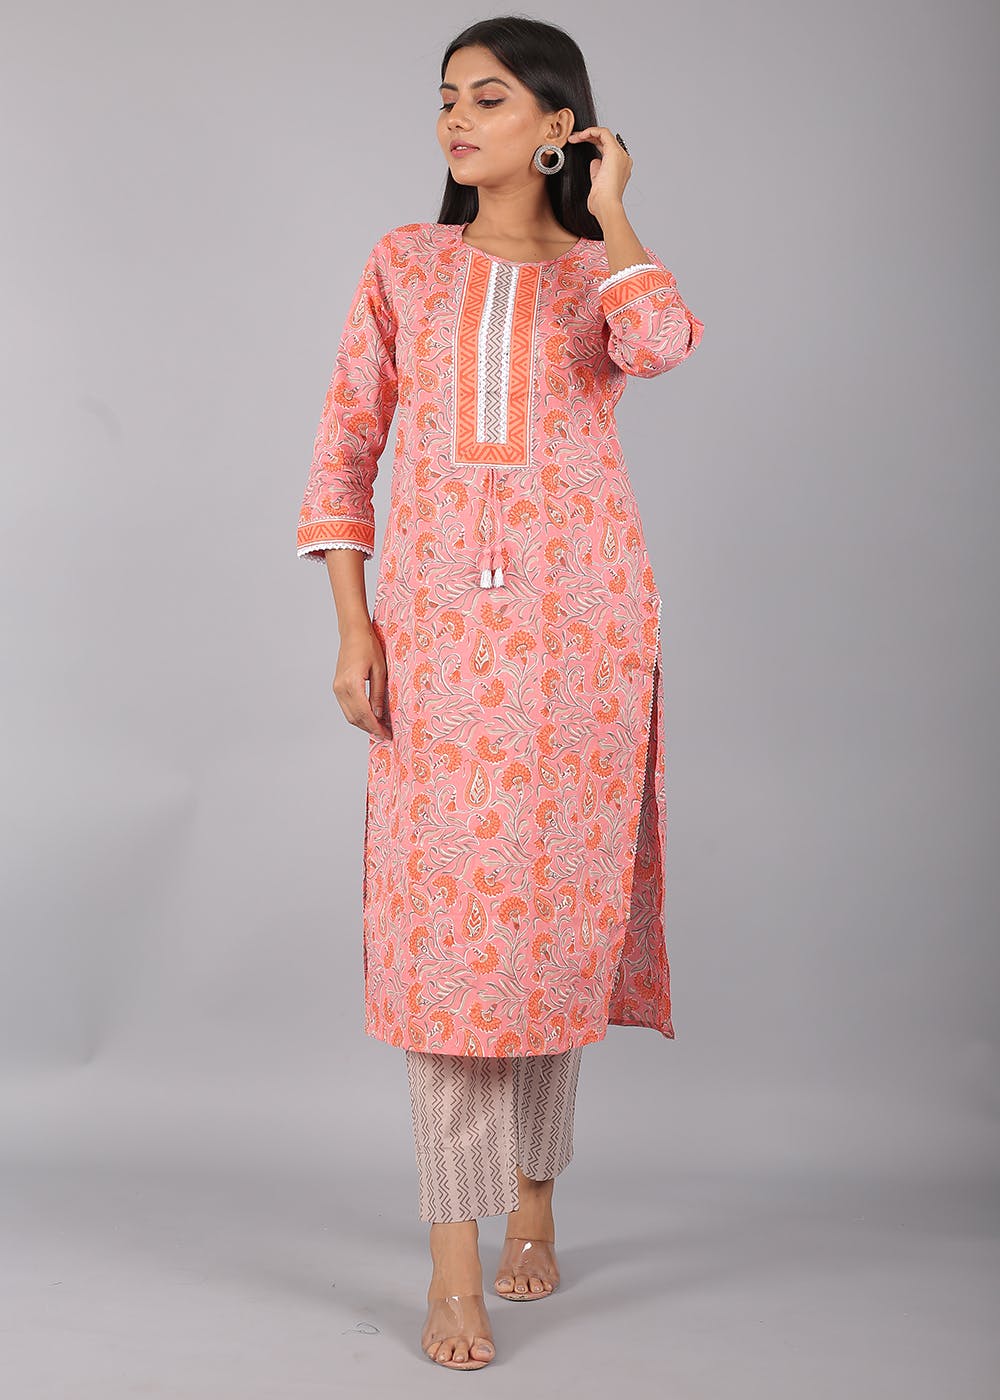 Orange And Pink Embroidered Kurti Pant Set With Dupatta – Apparel Designer